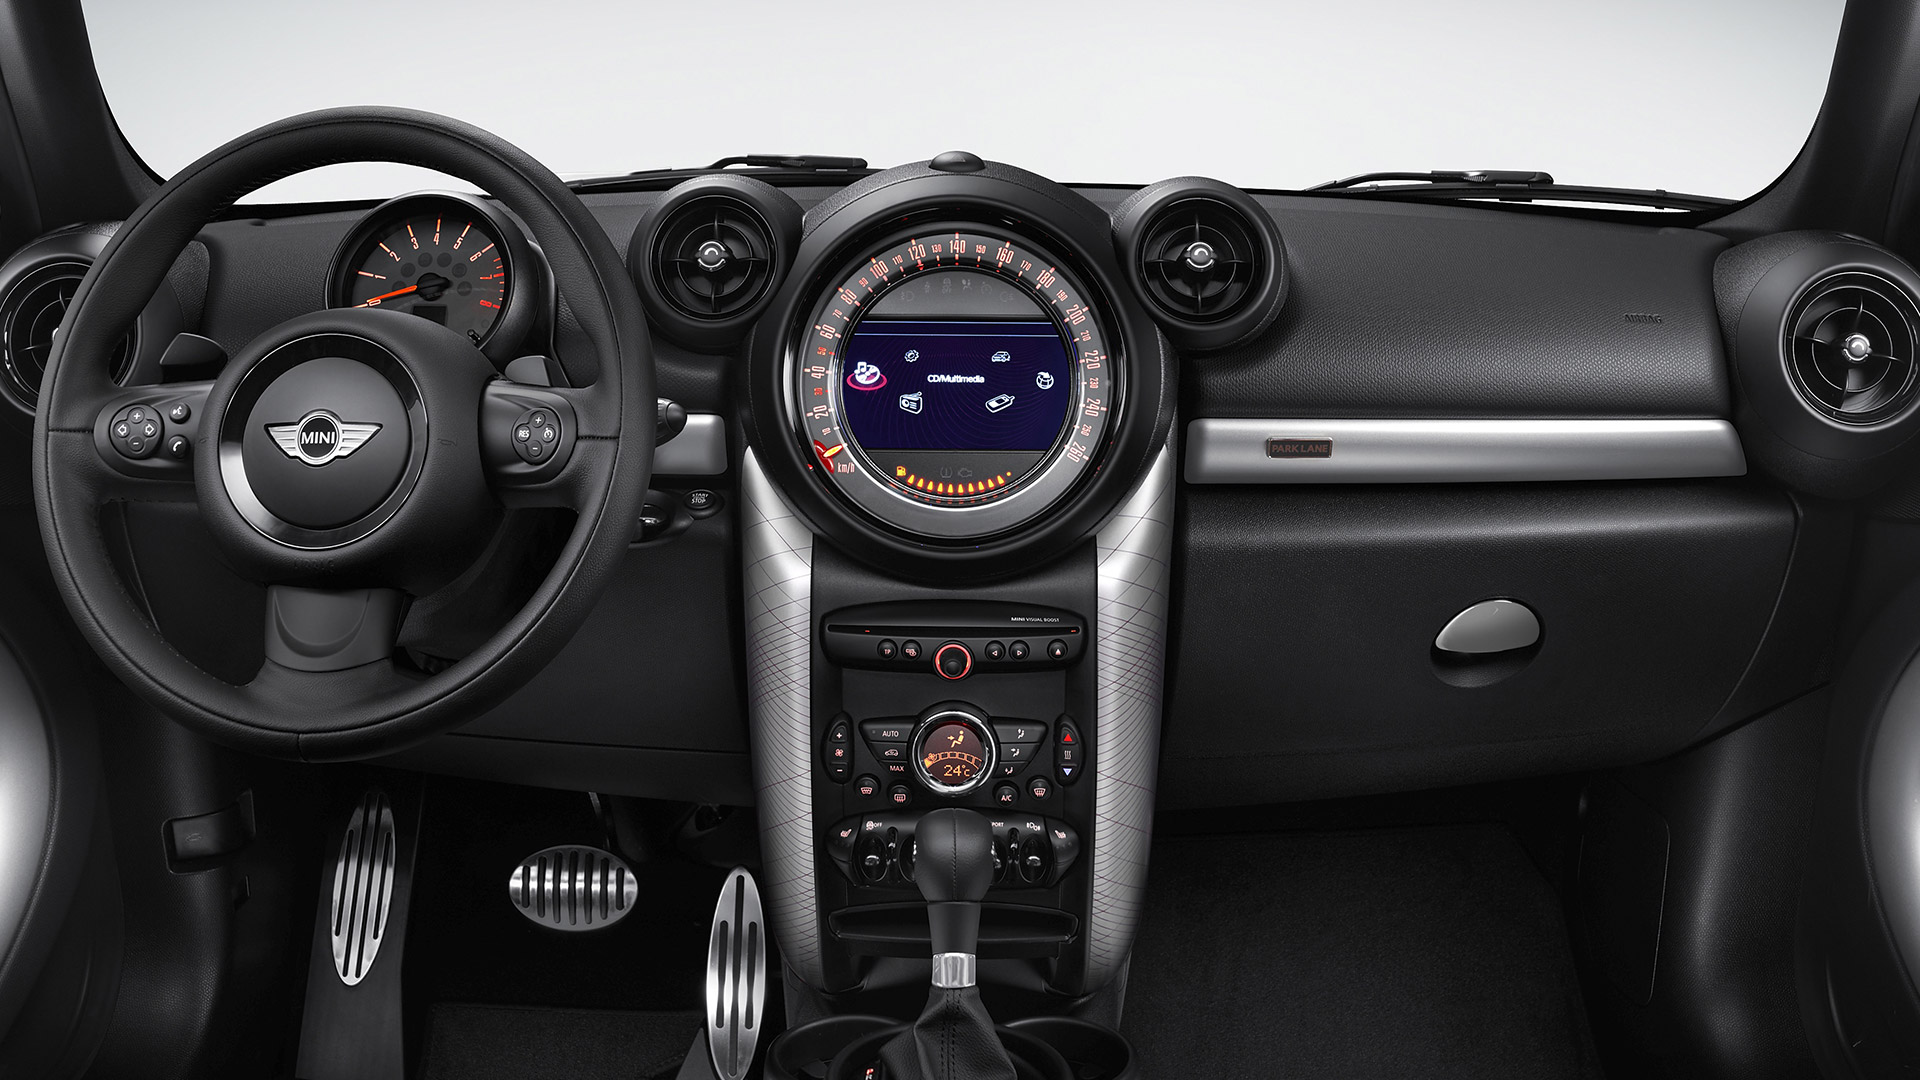 Mini Cooper D 2015 Countryman Interior Car Photos Overdrive